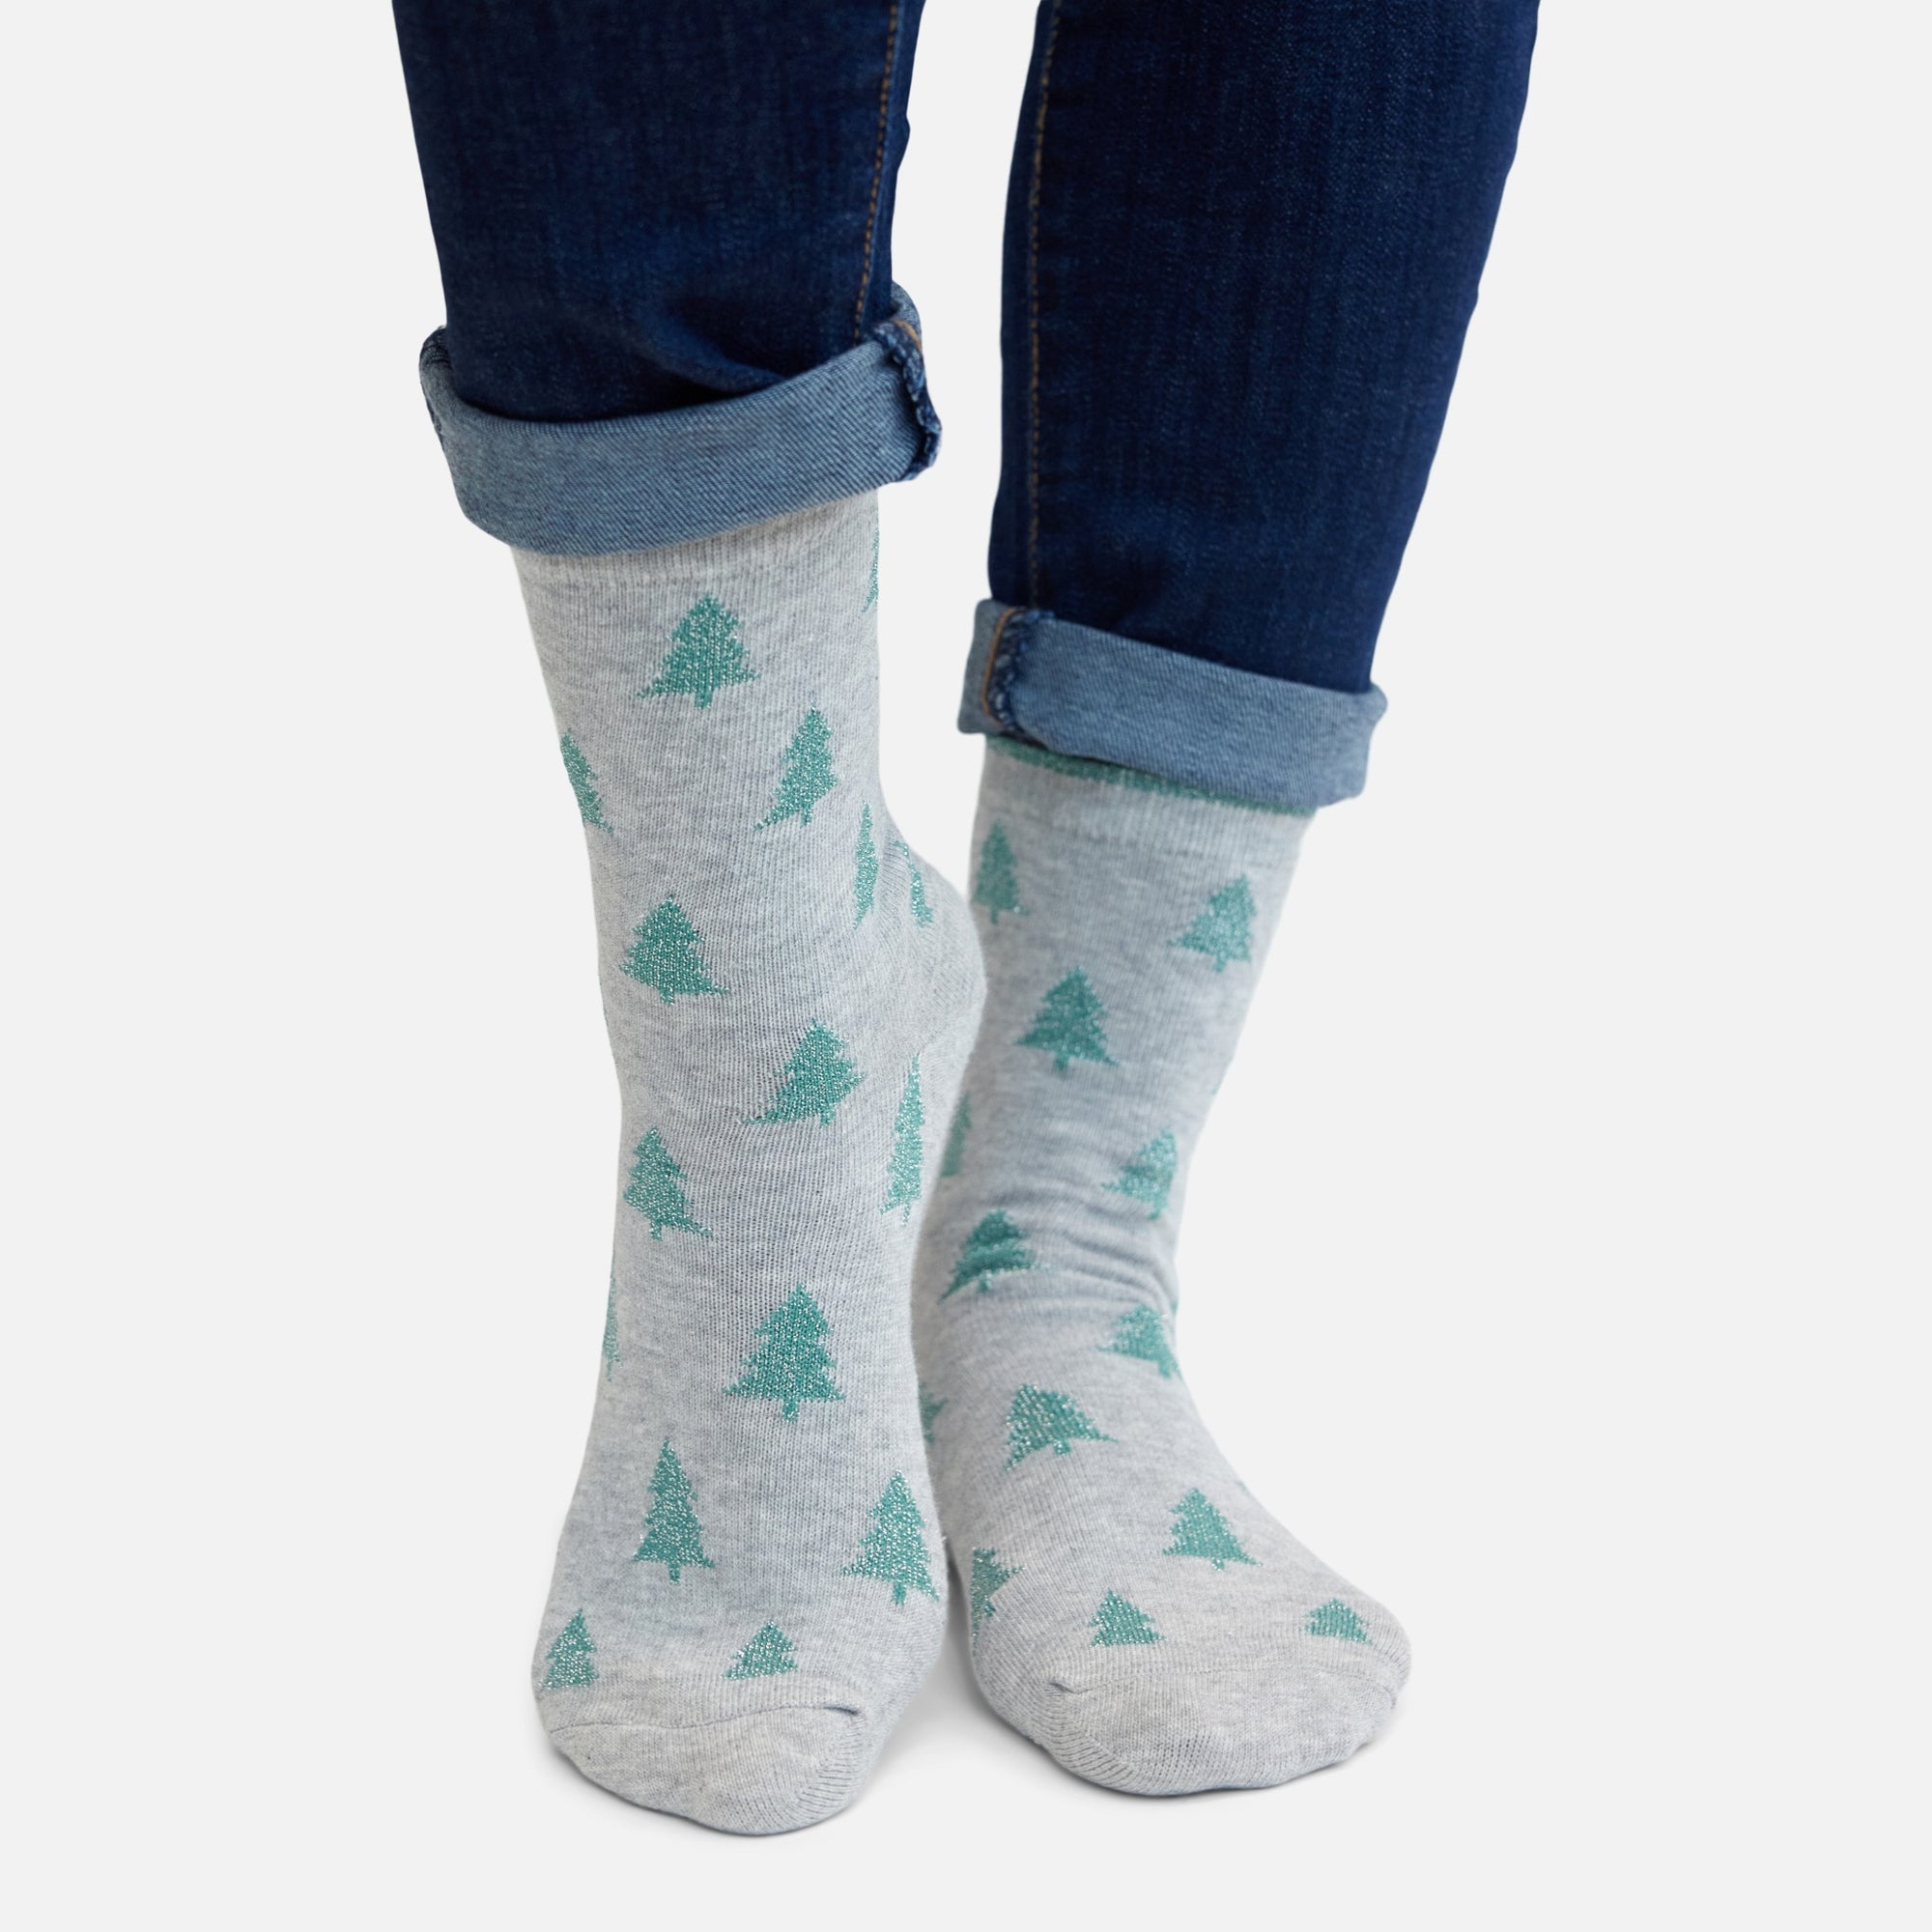 Grey socks with trees